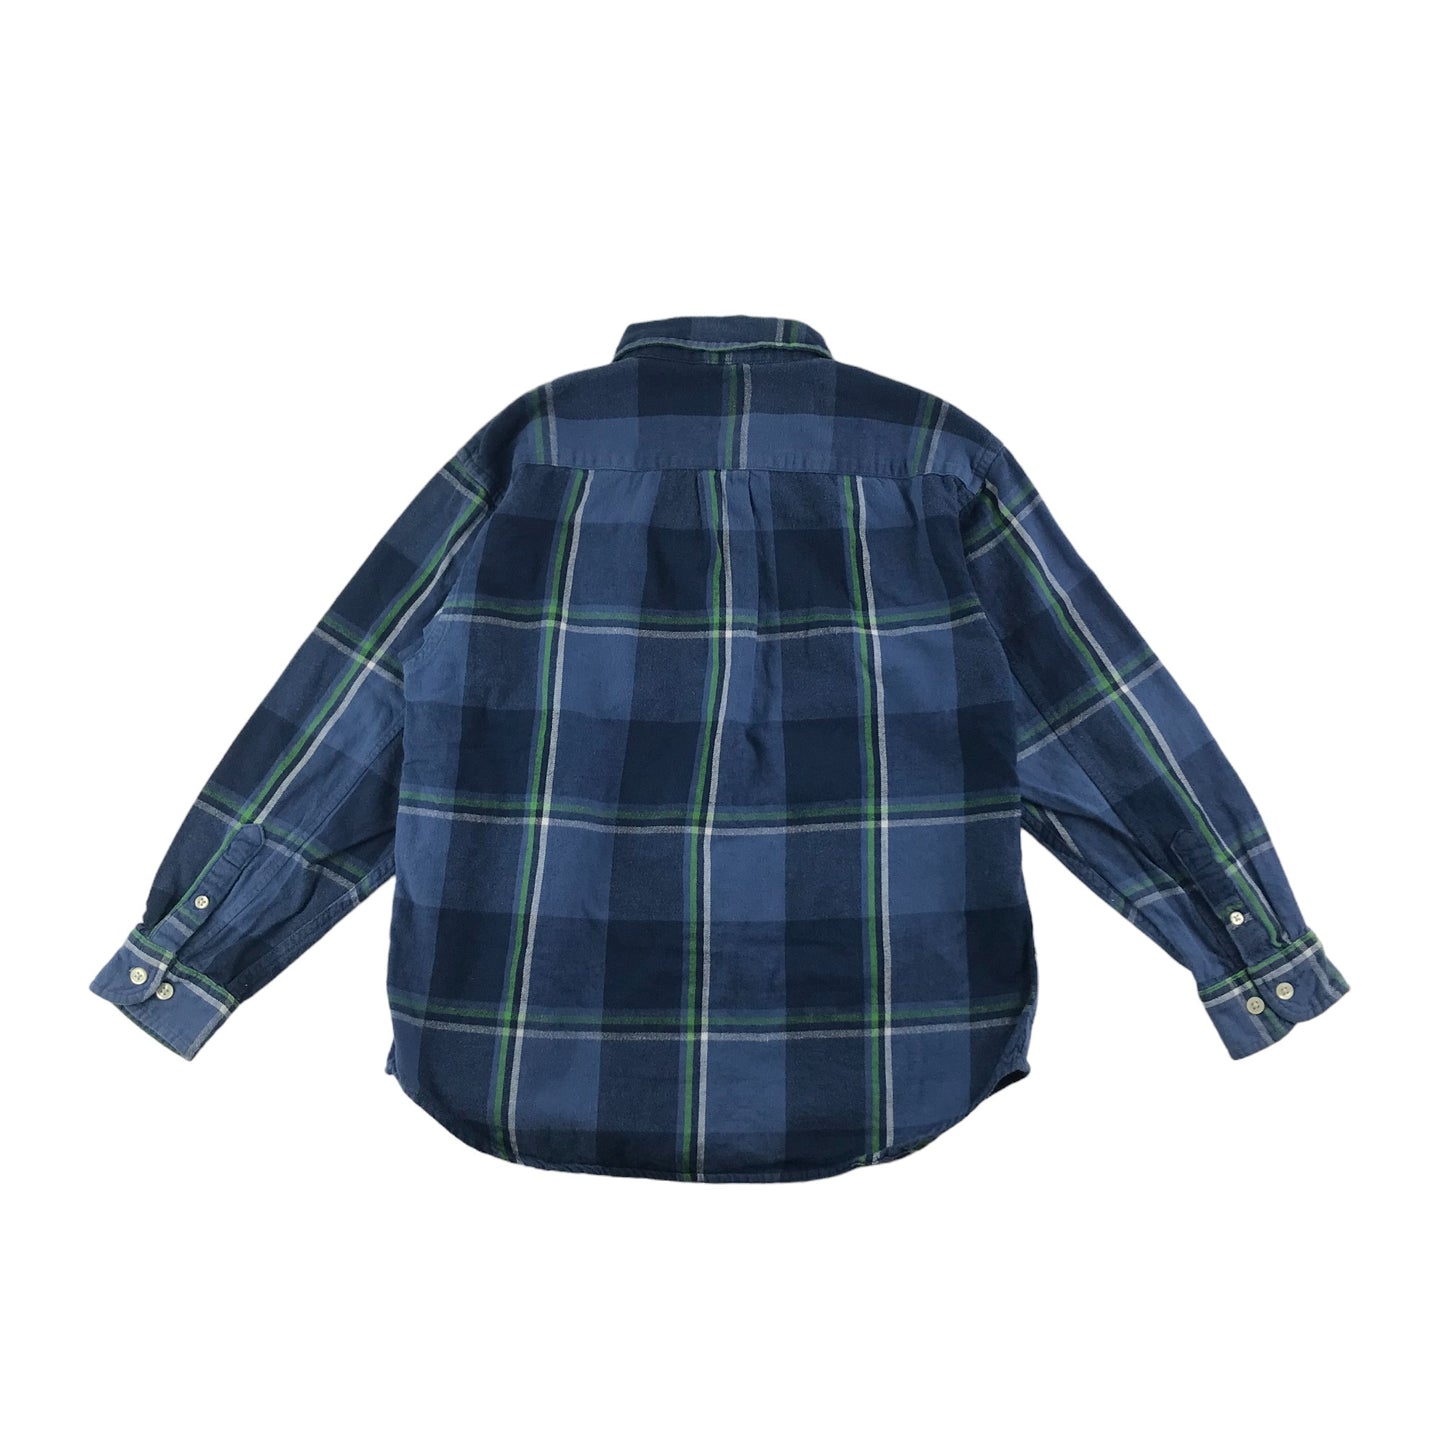 GAP Shirt Age 7 Blue Check Pattern Button Up Cotton